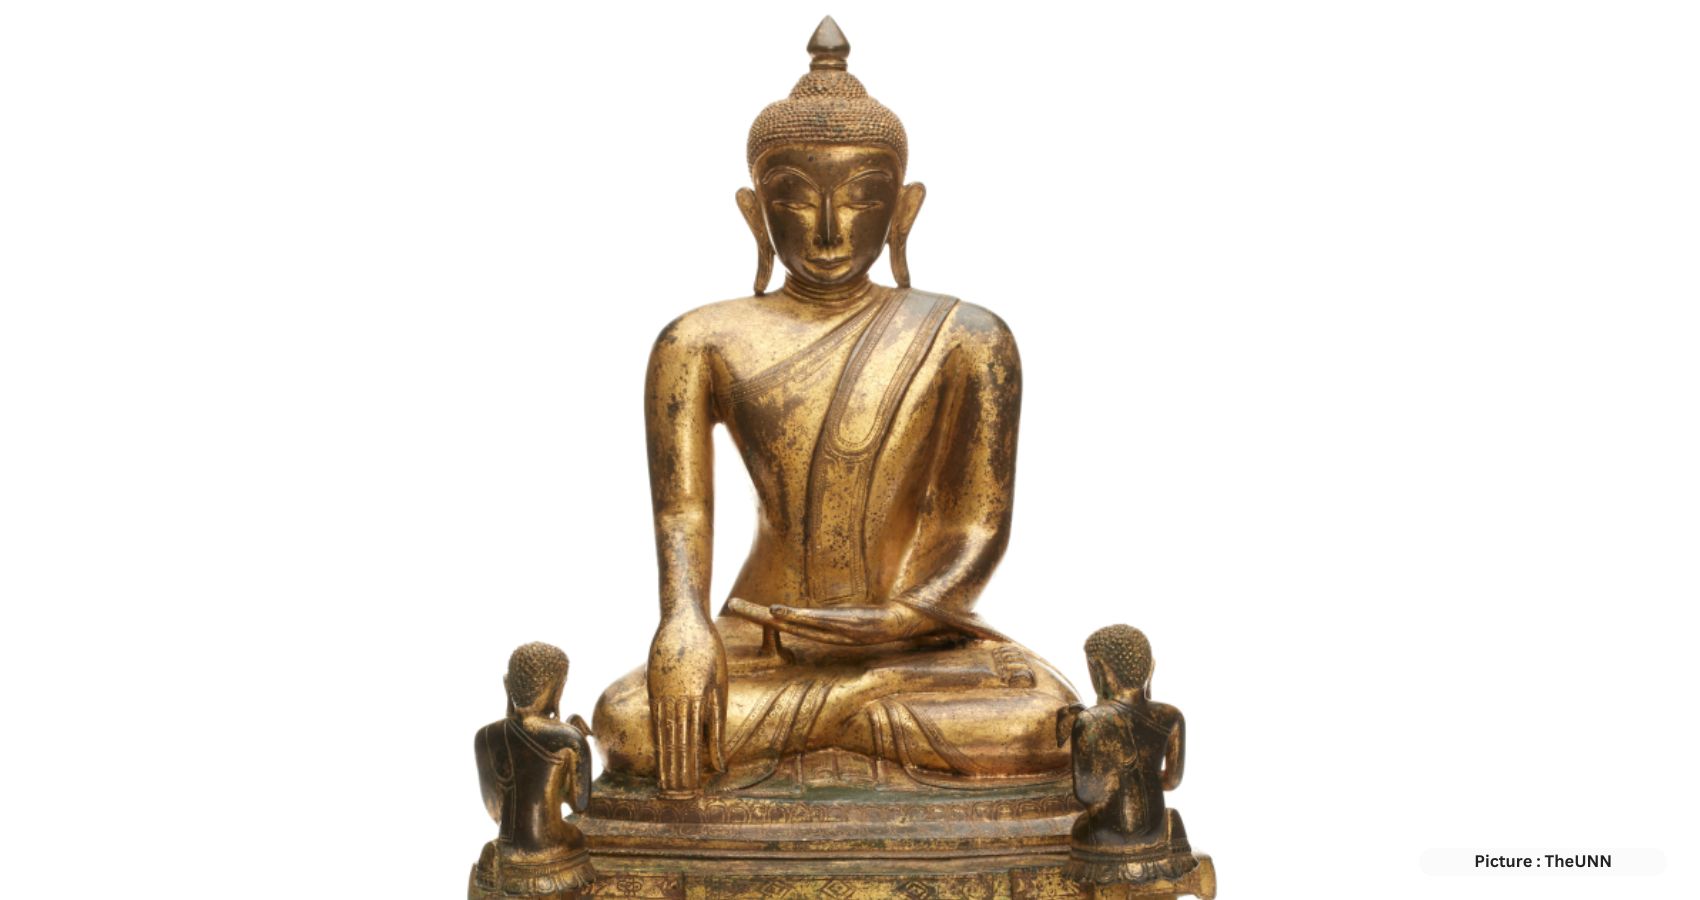 Asia Society Museum Presents Buddha, Sage of the Shakya Clan